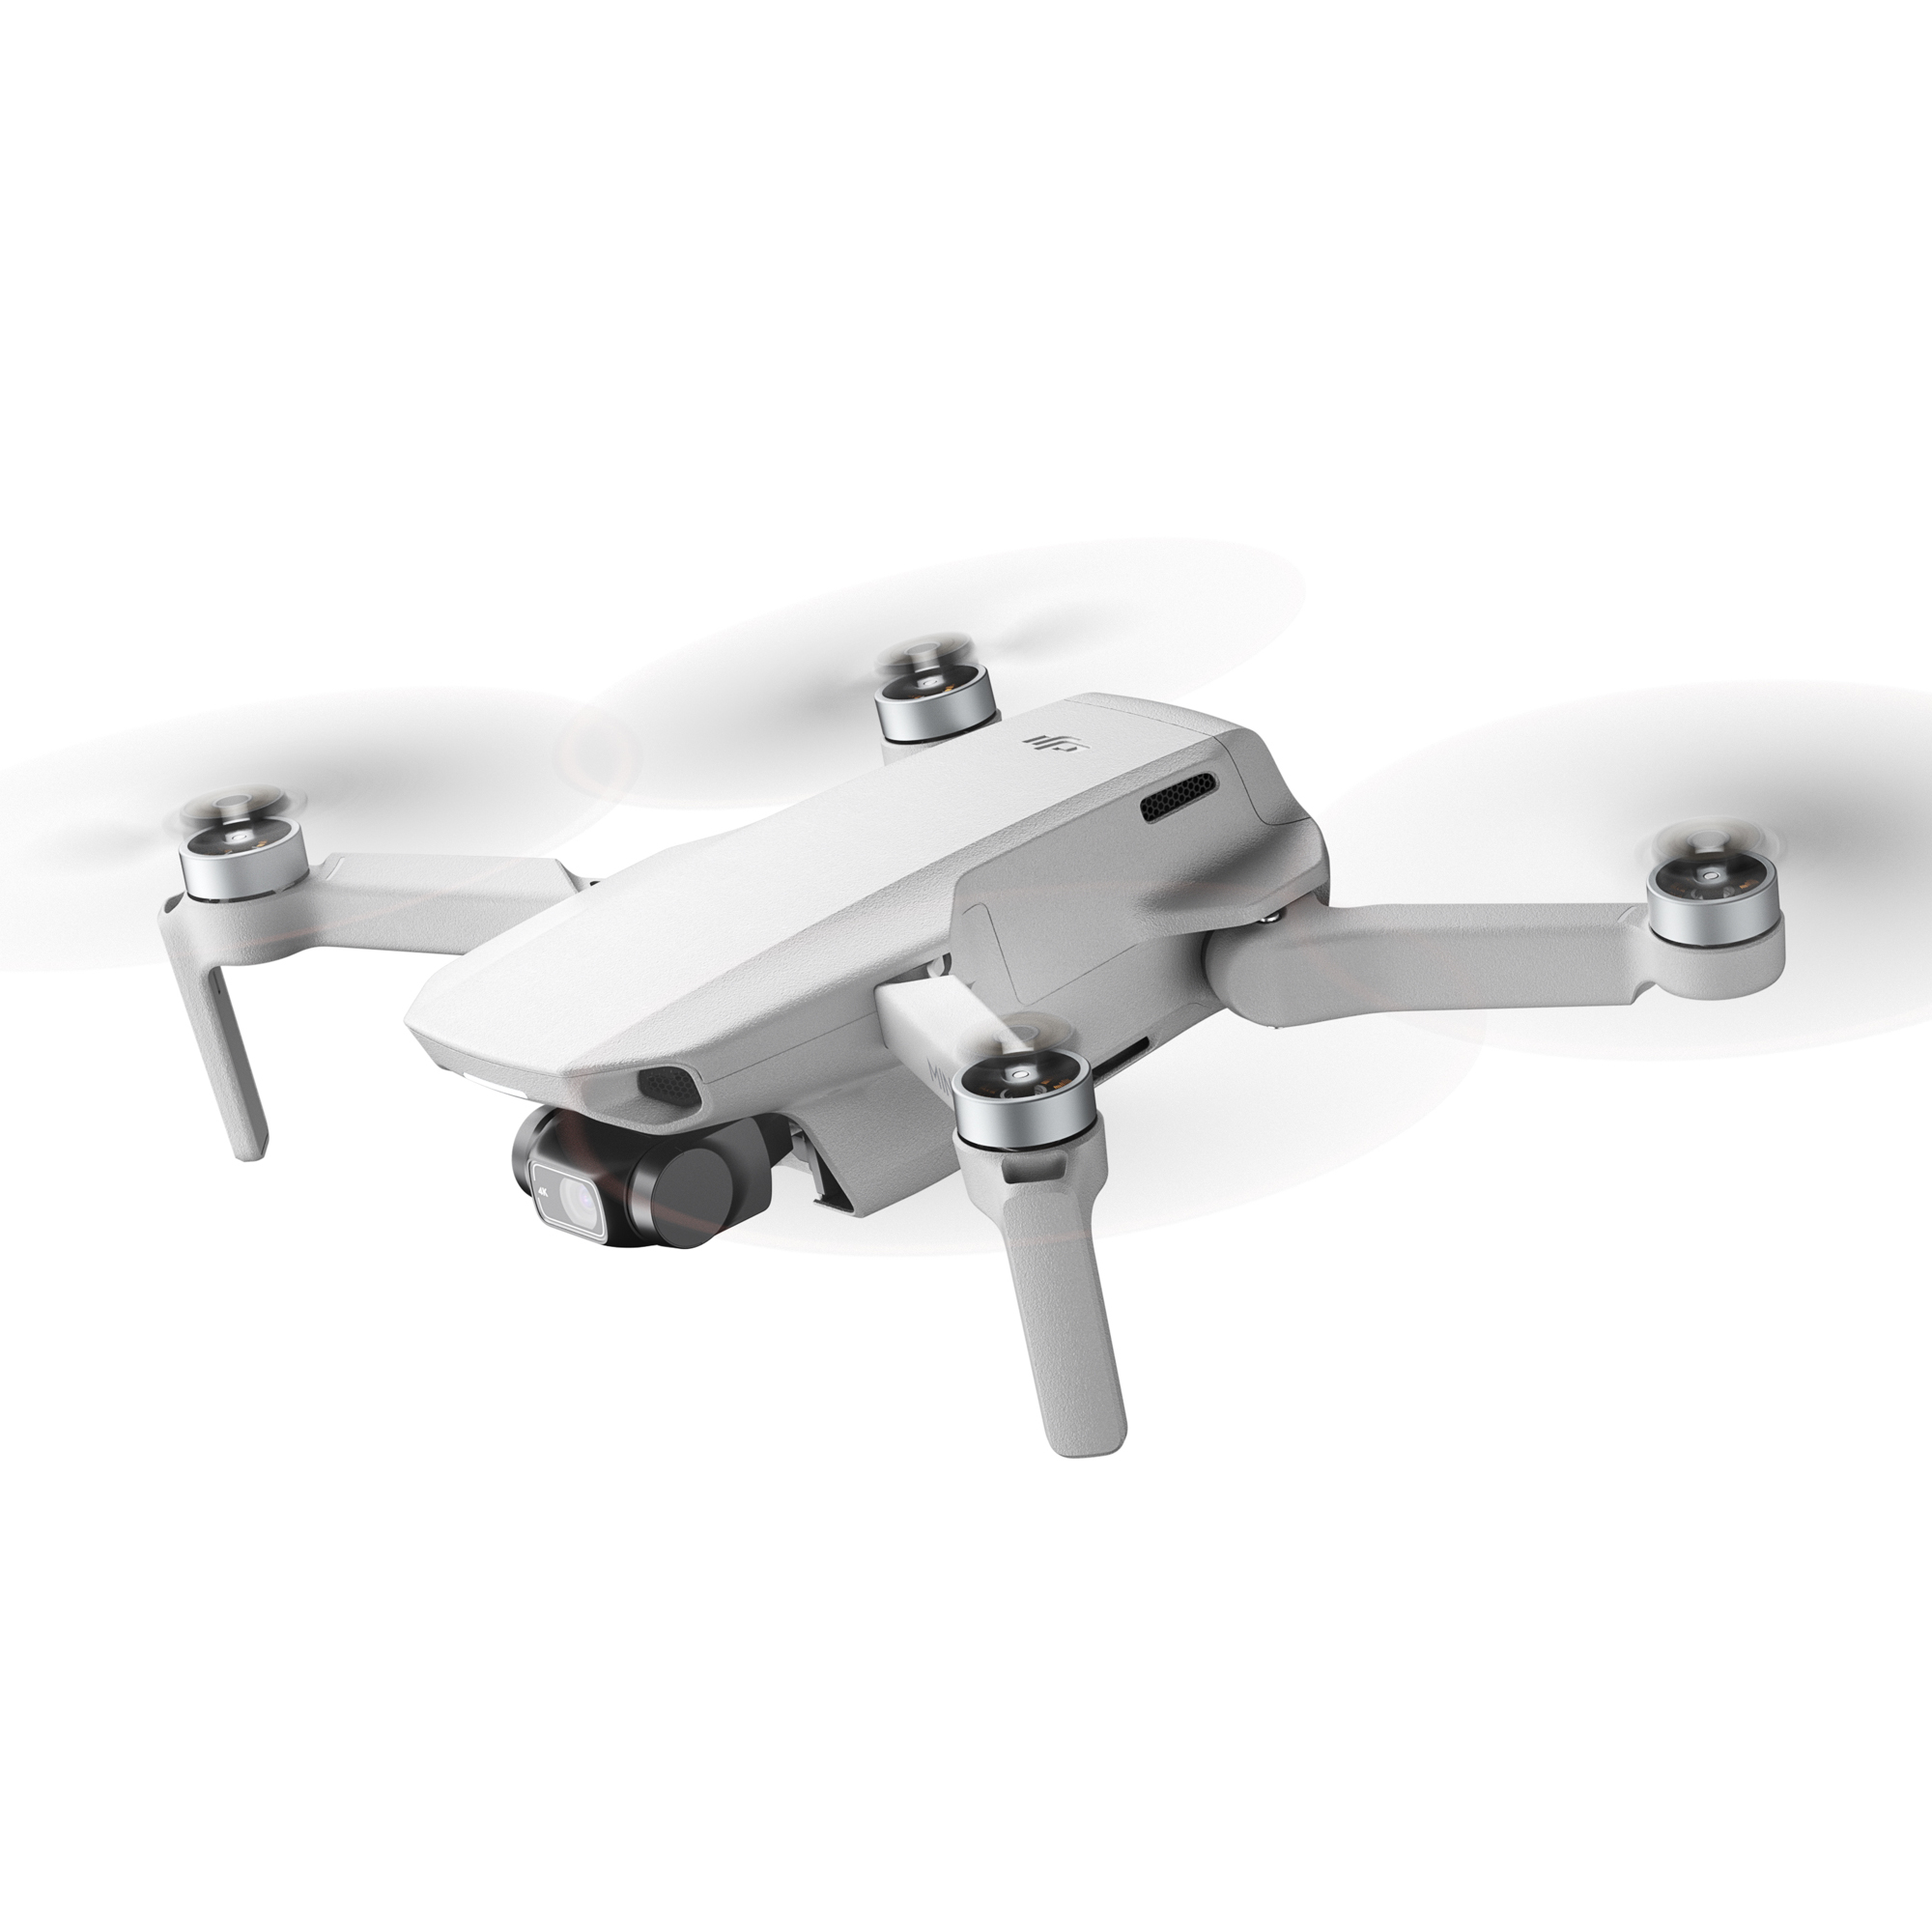 dji mini drone 2 accessories